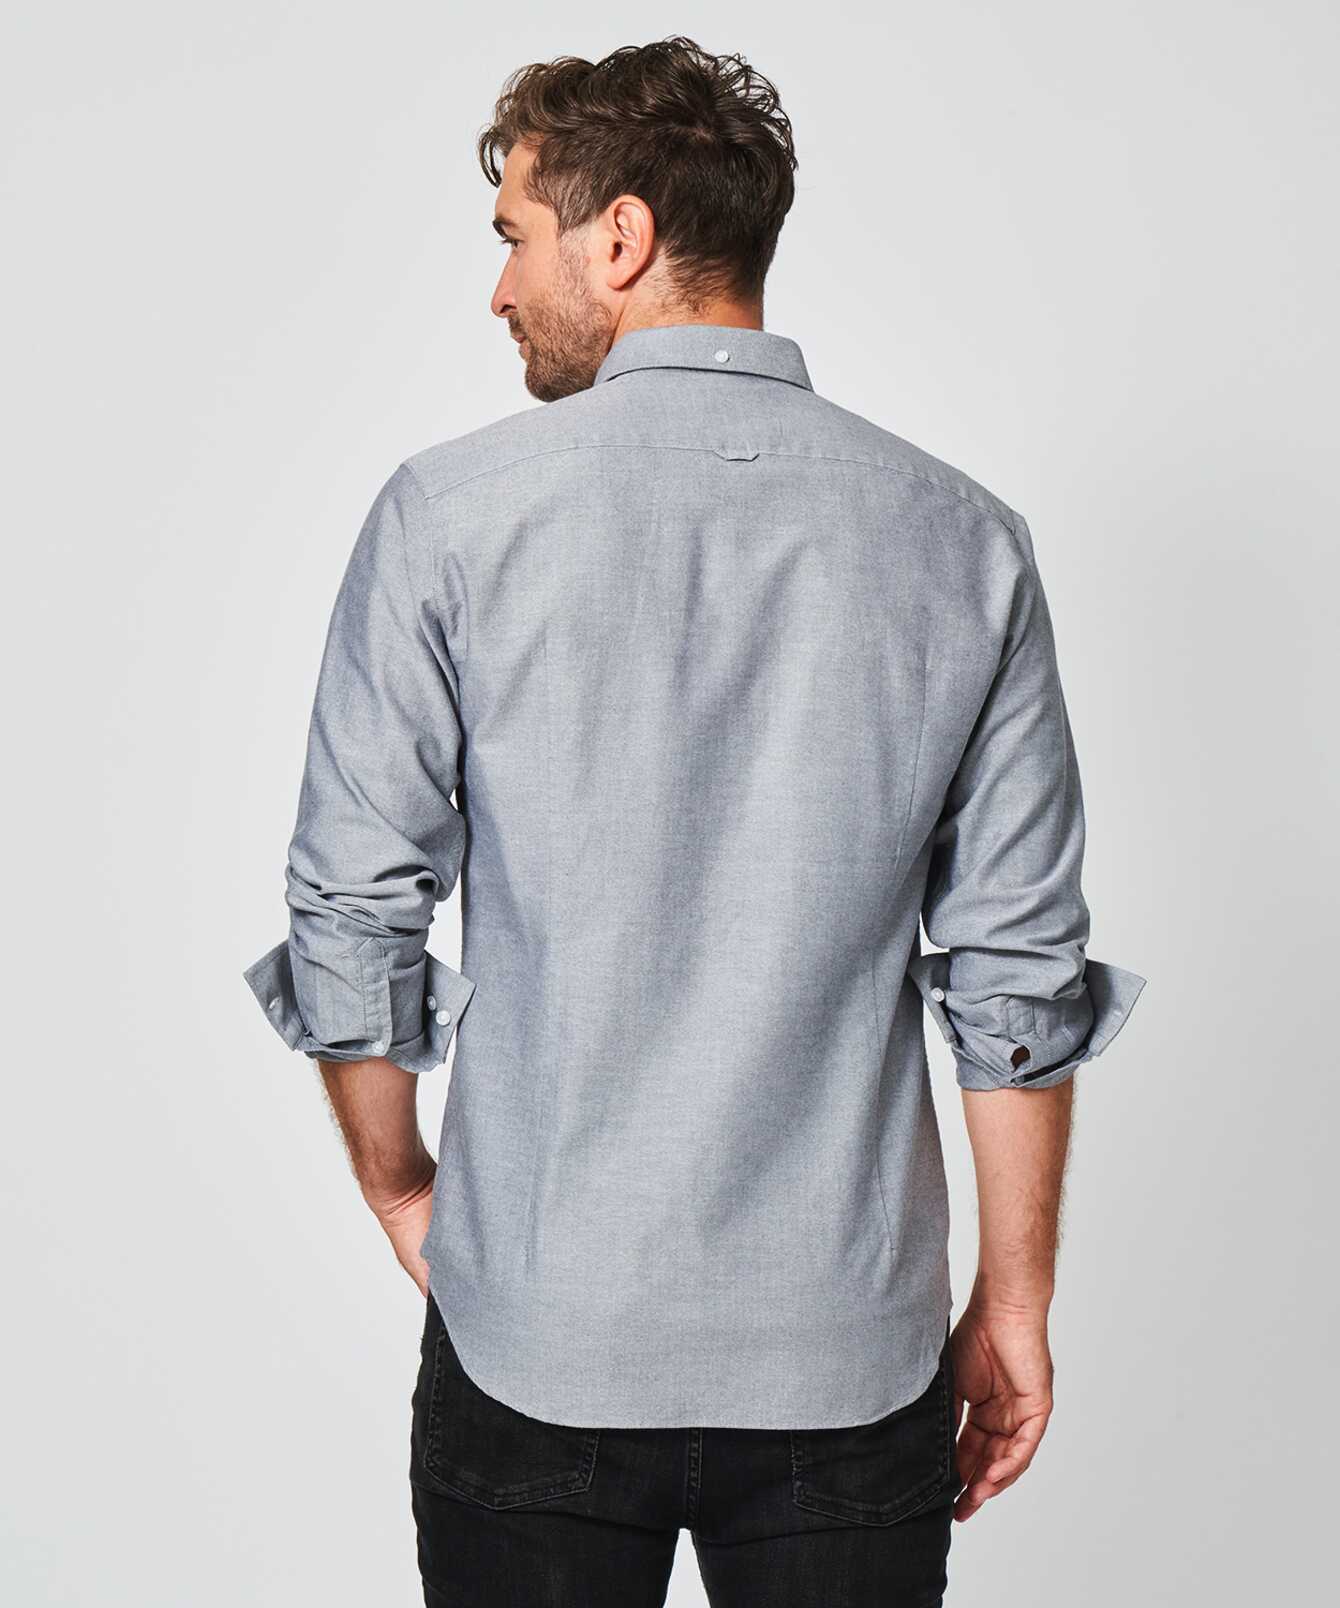 Shirt Hampton Oxford Shirt Light Grey  The Shirt Factory